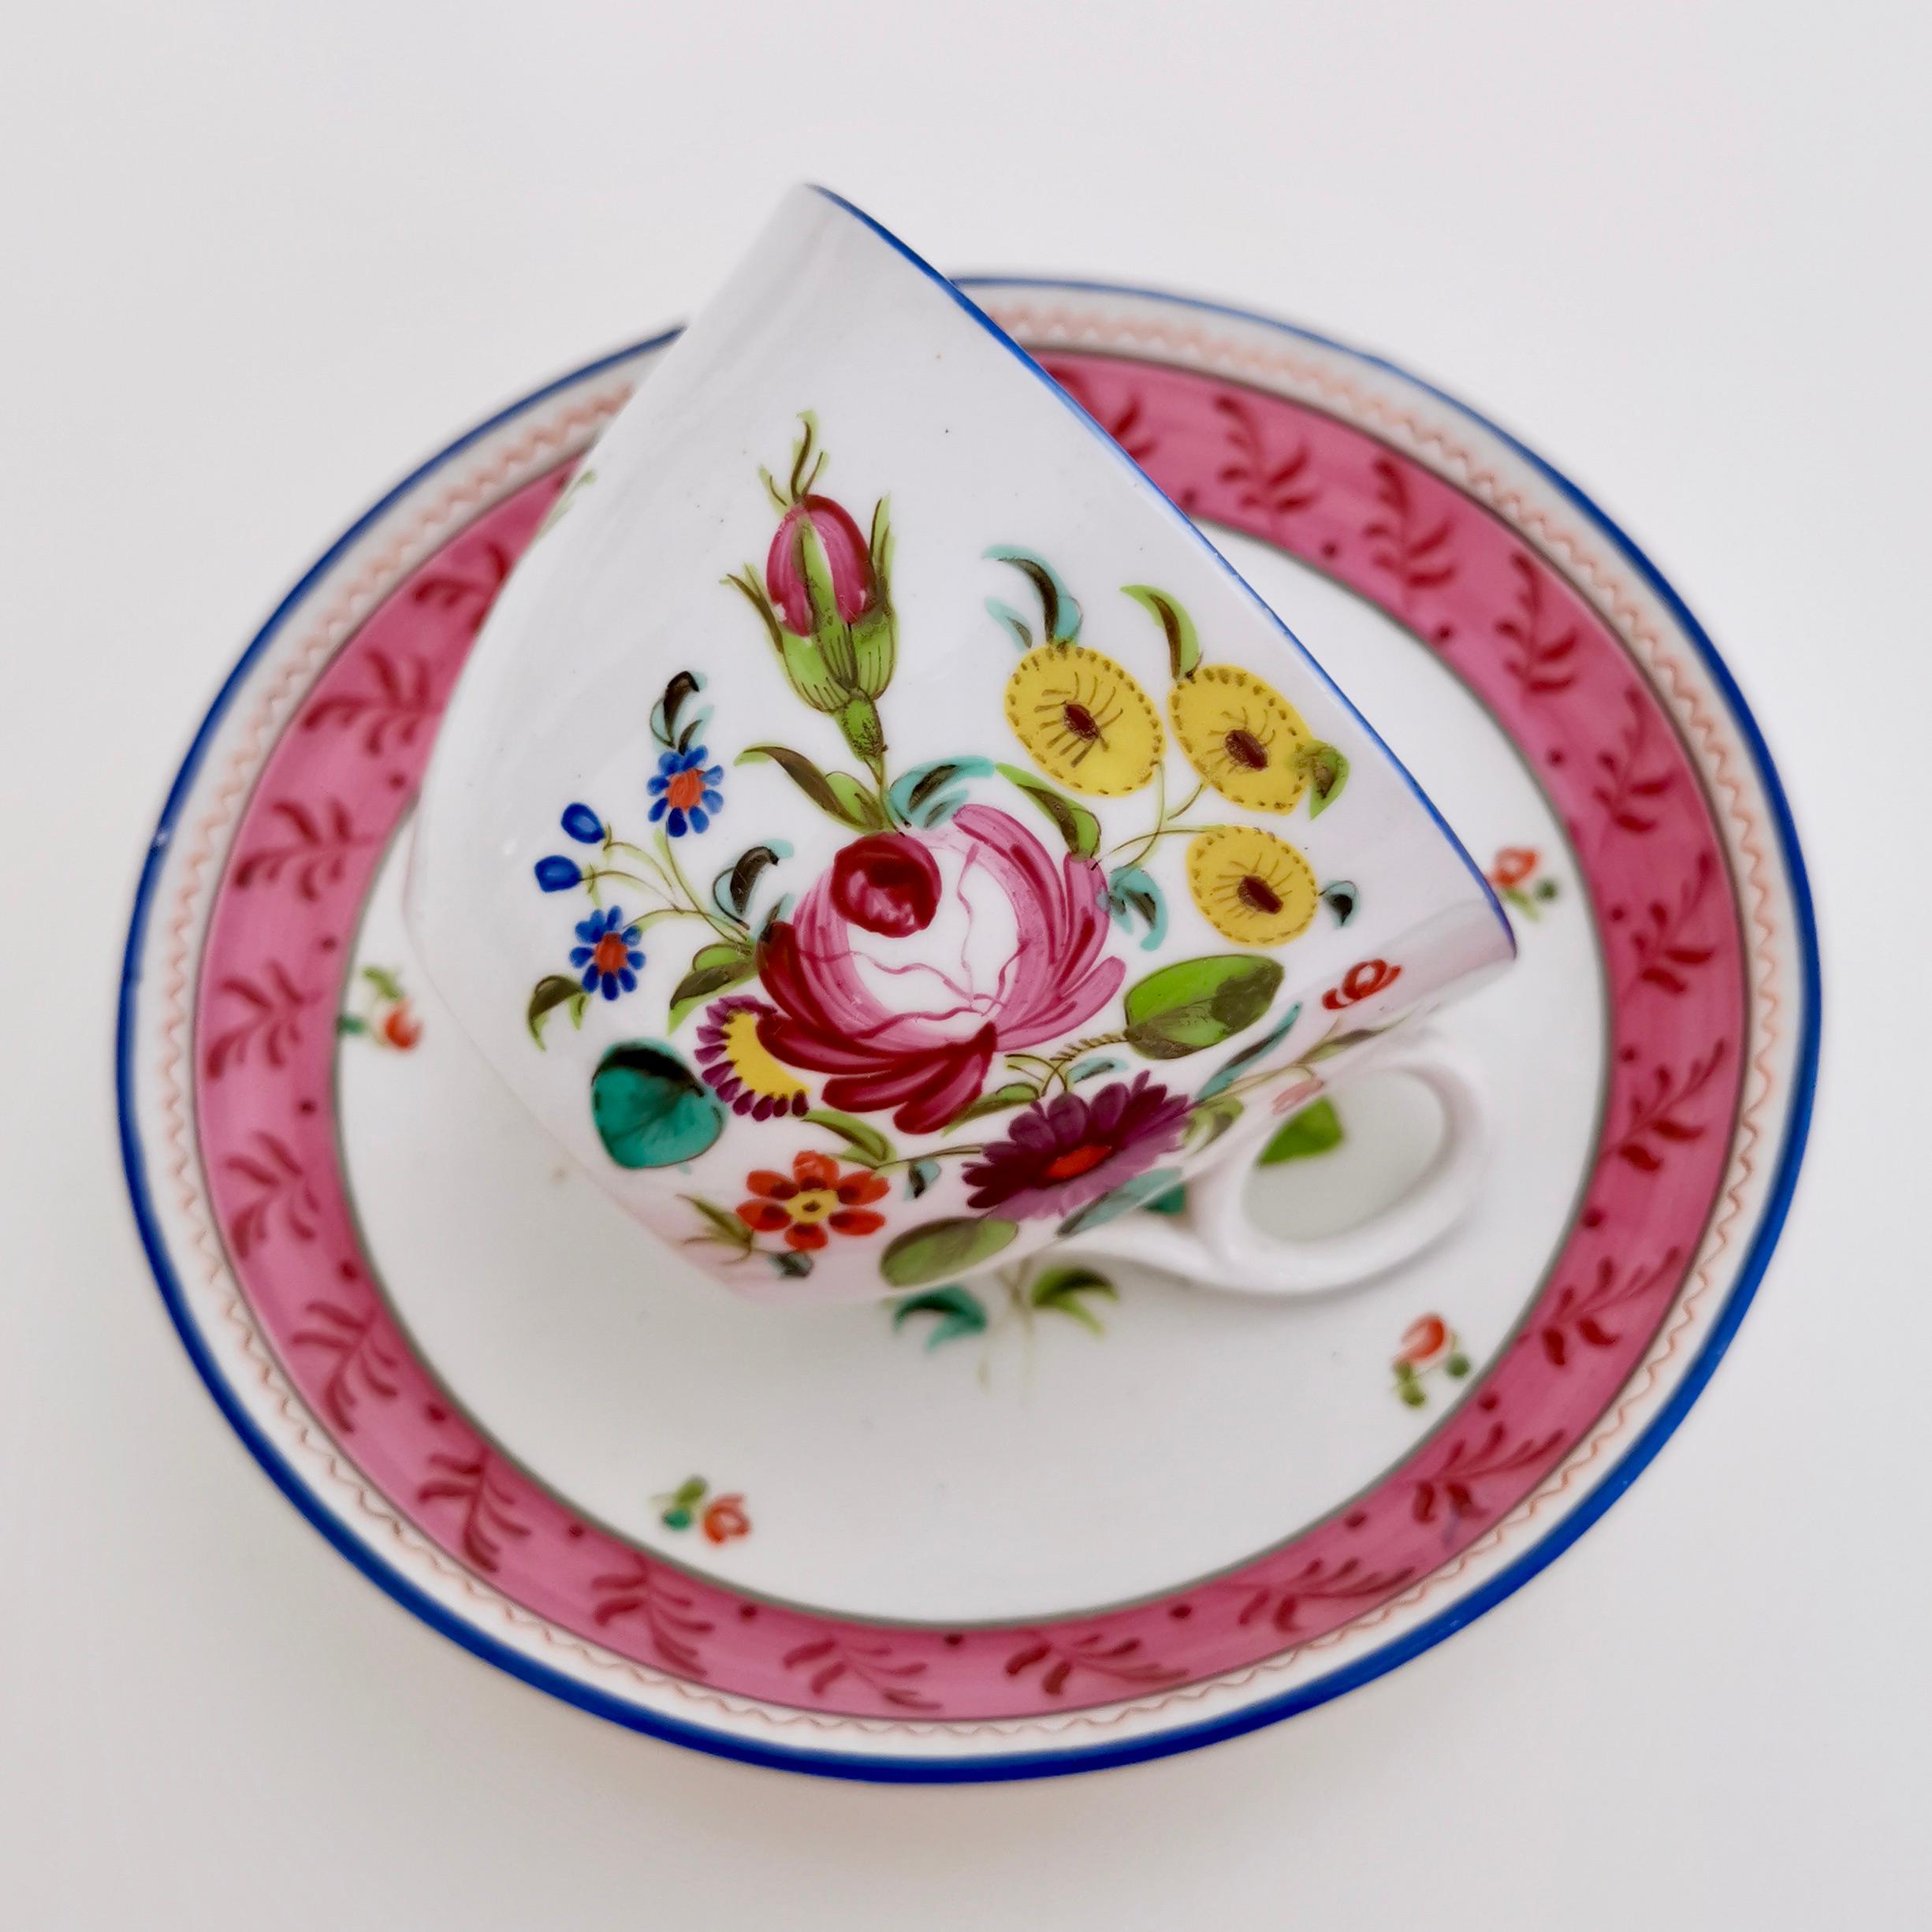 English New Hall Porcelain Teacup, Hybrid Paste, Flowers Patt, 1180, circa 1815